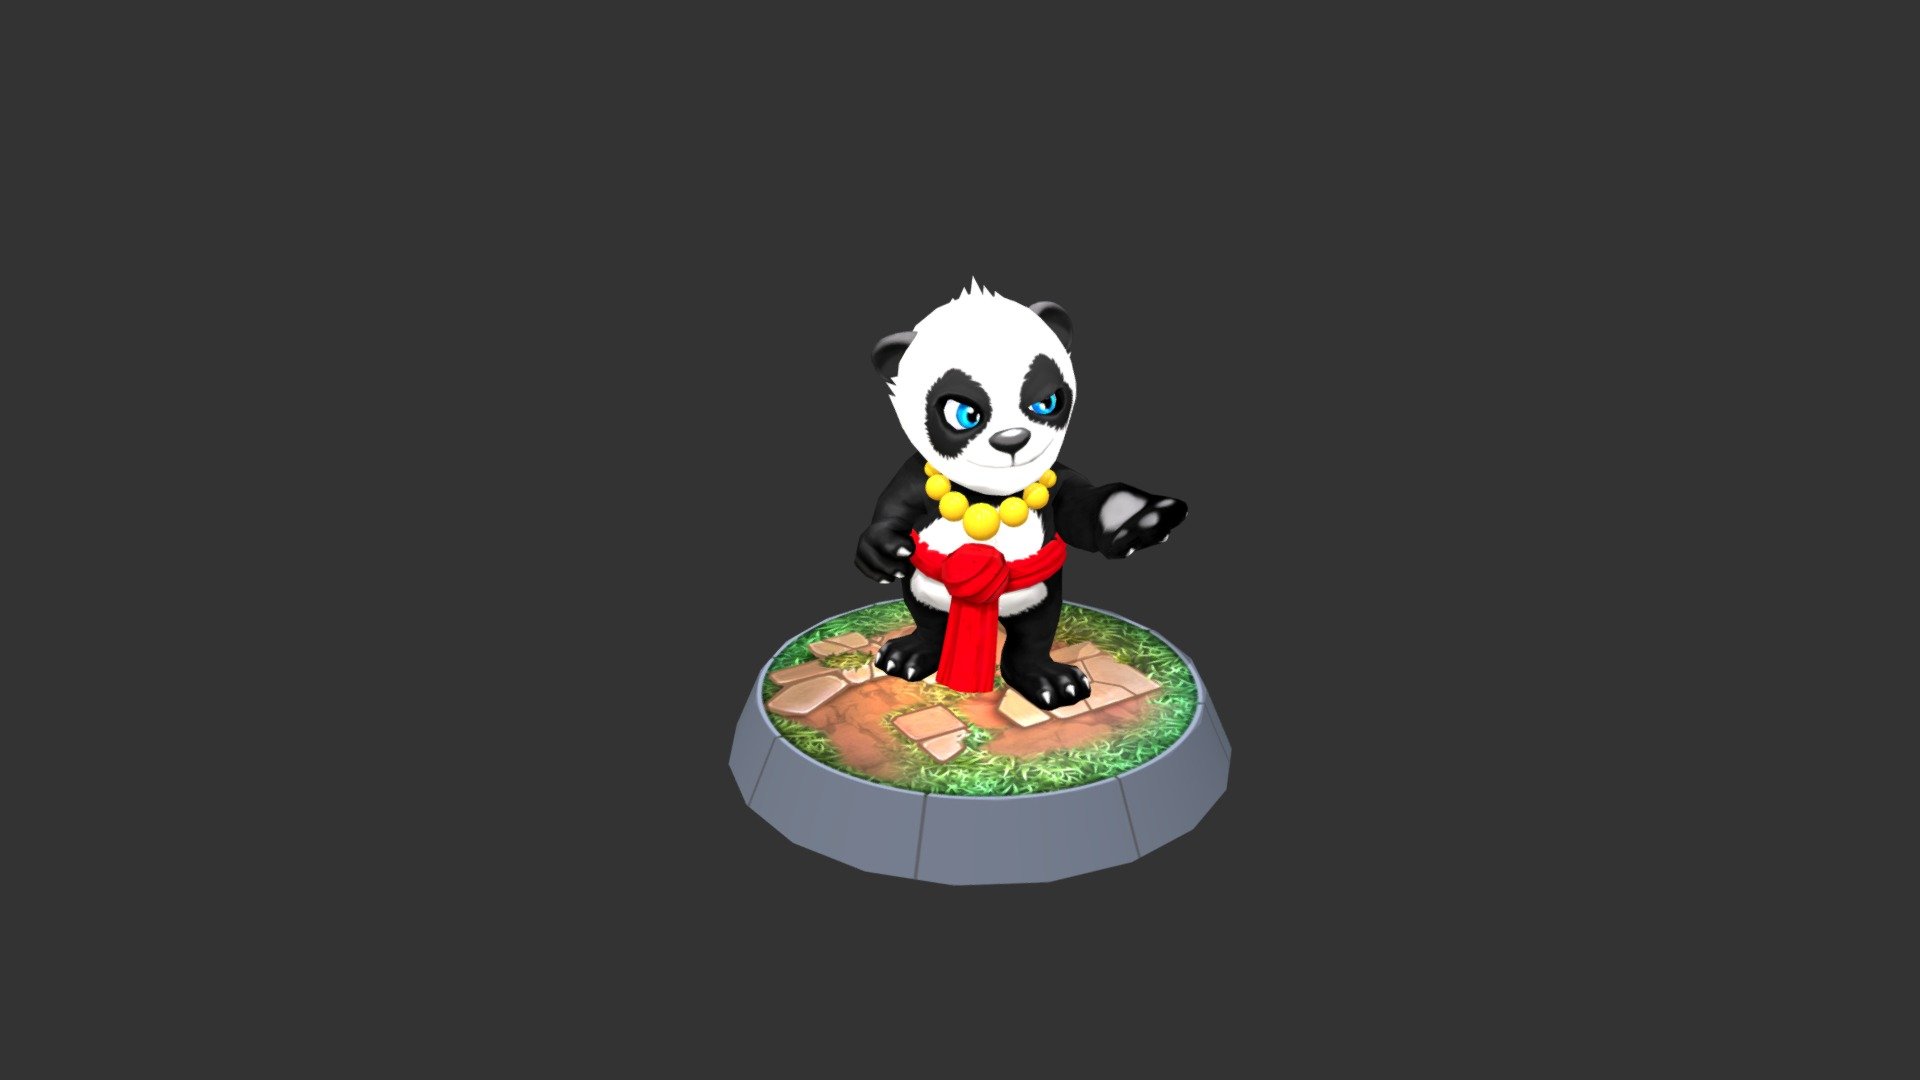 The Shaolin Panda